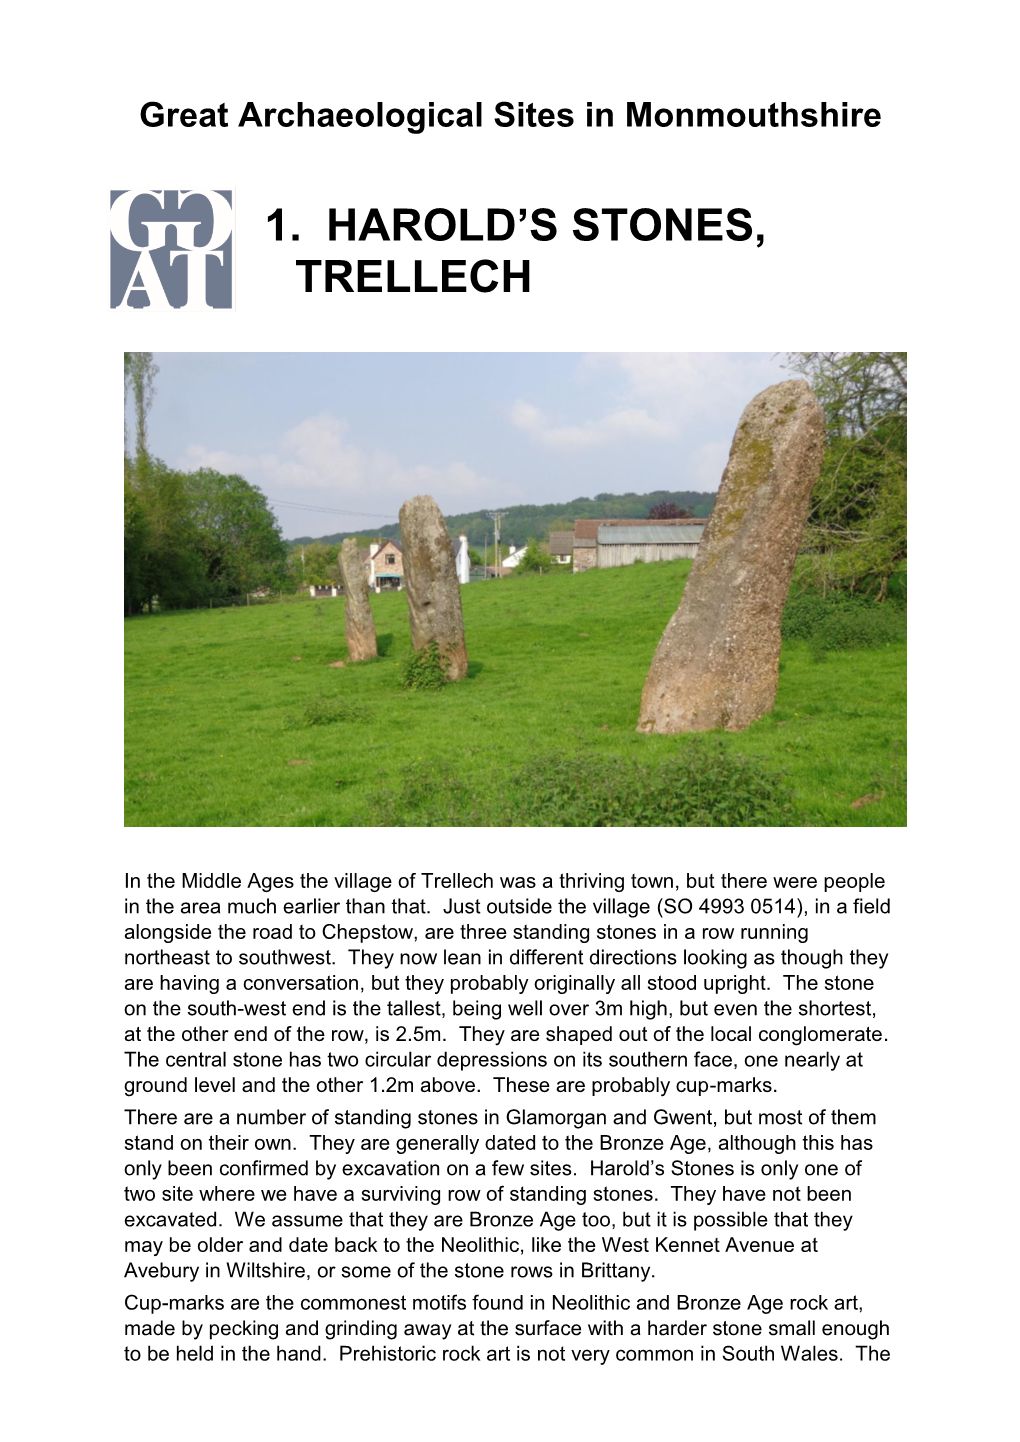 1. Harold's Stones, Trellech